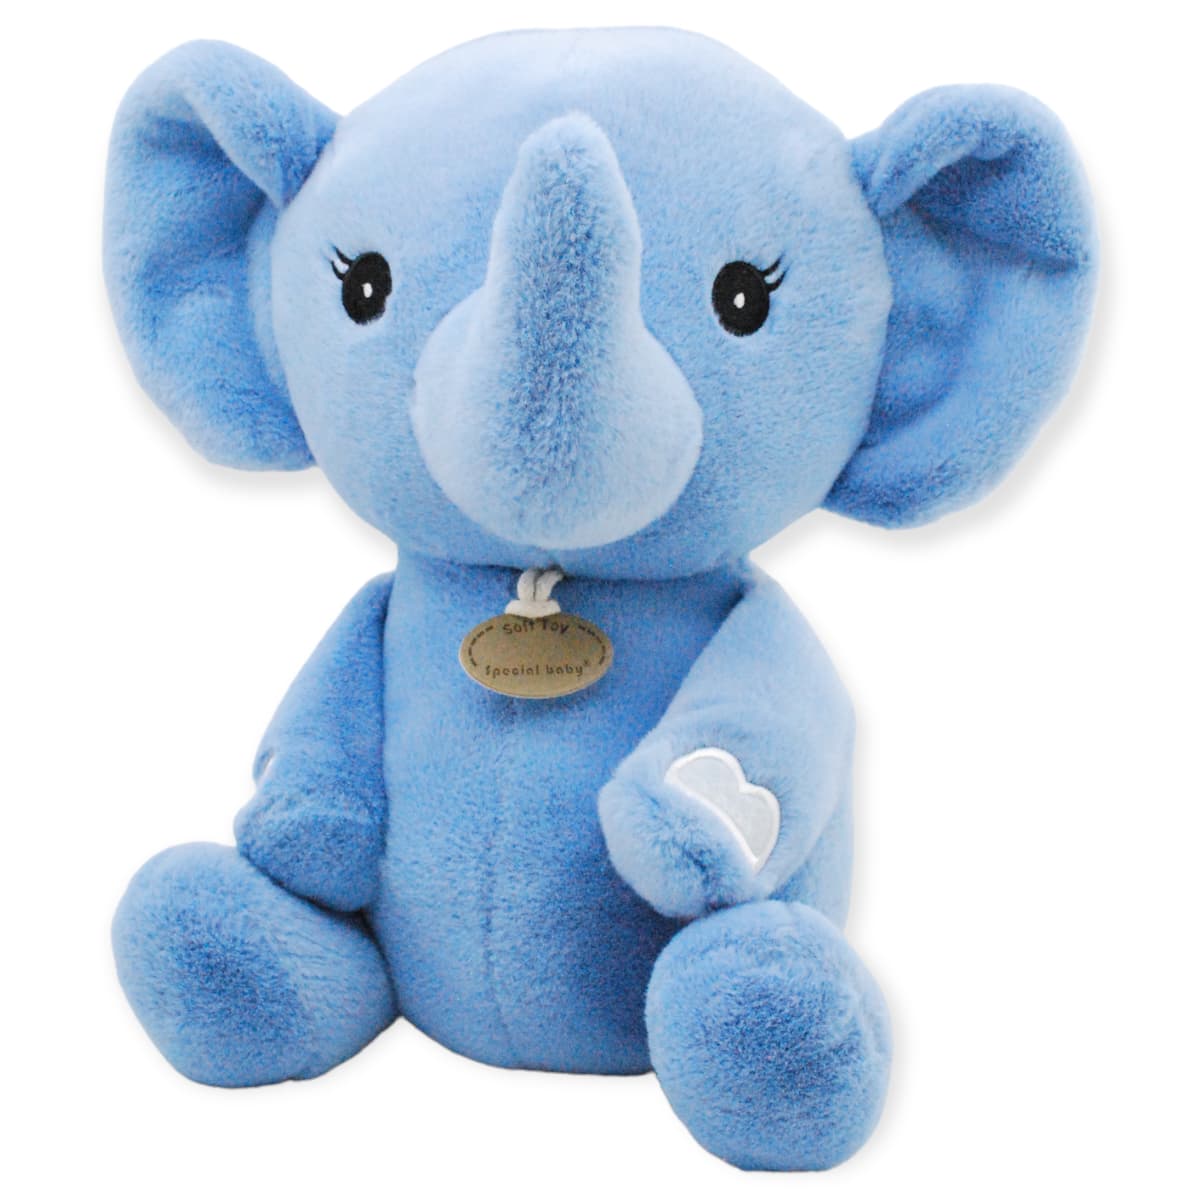 Peluche Elefante Bebé Azul, peluche del reino